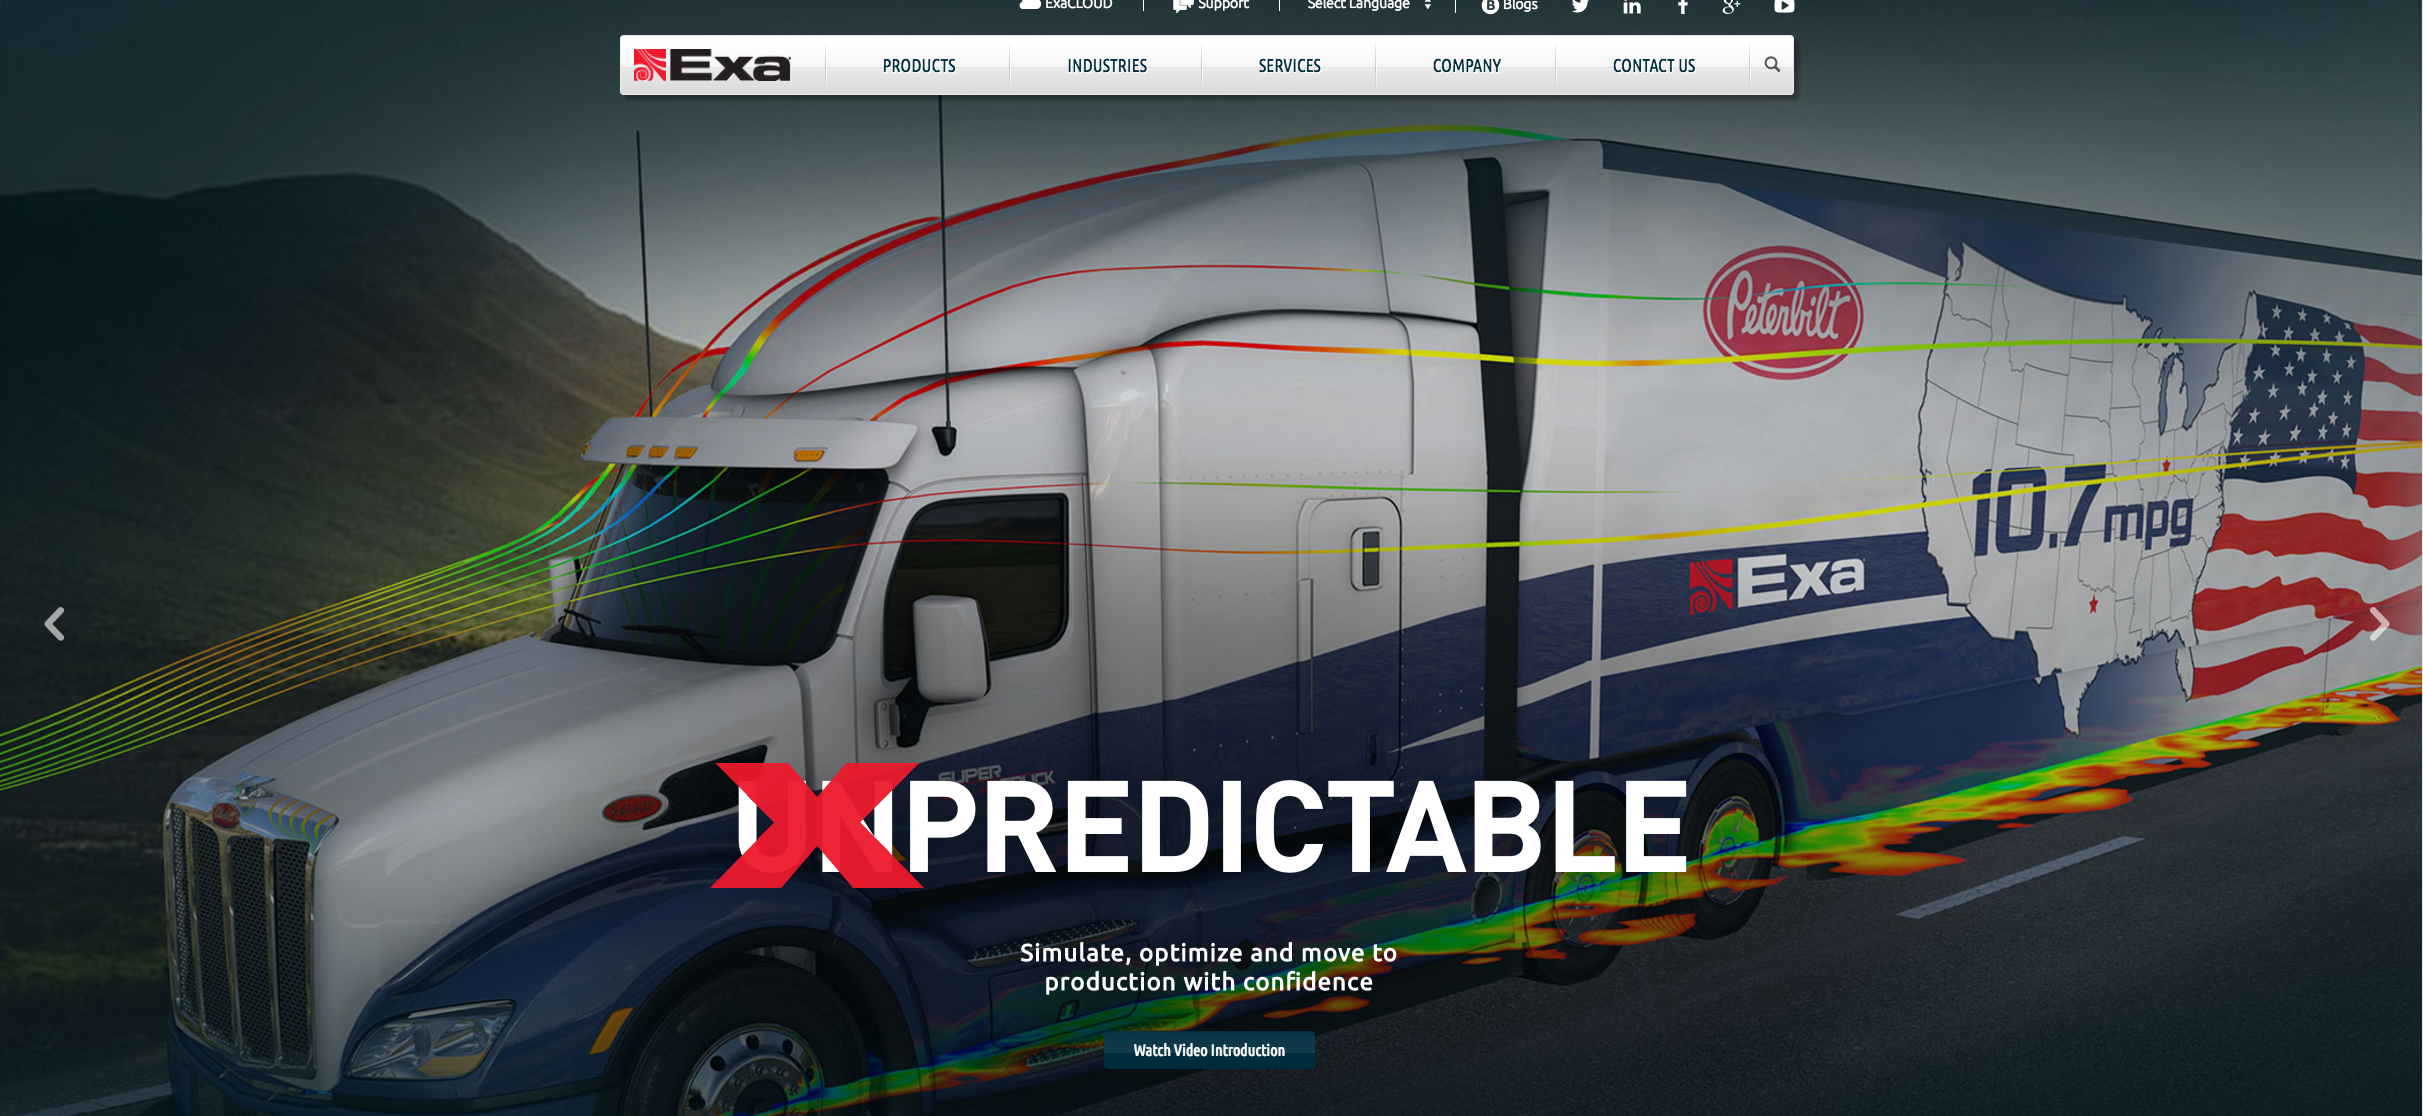 exa homepage example